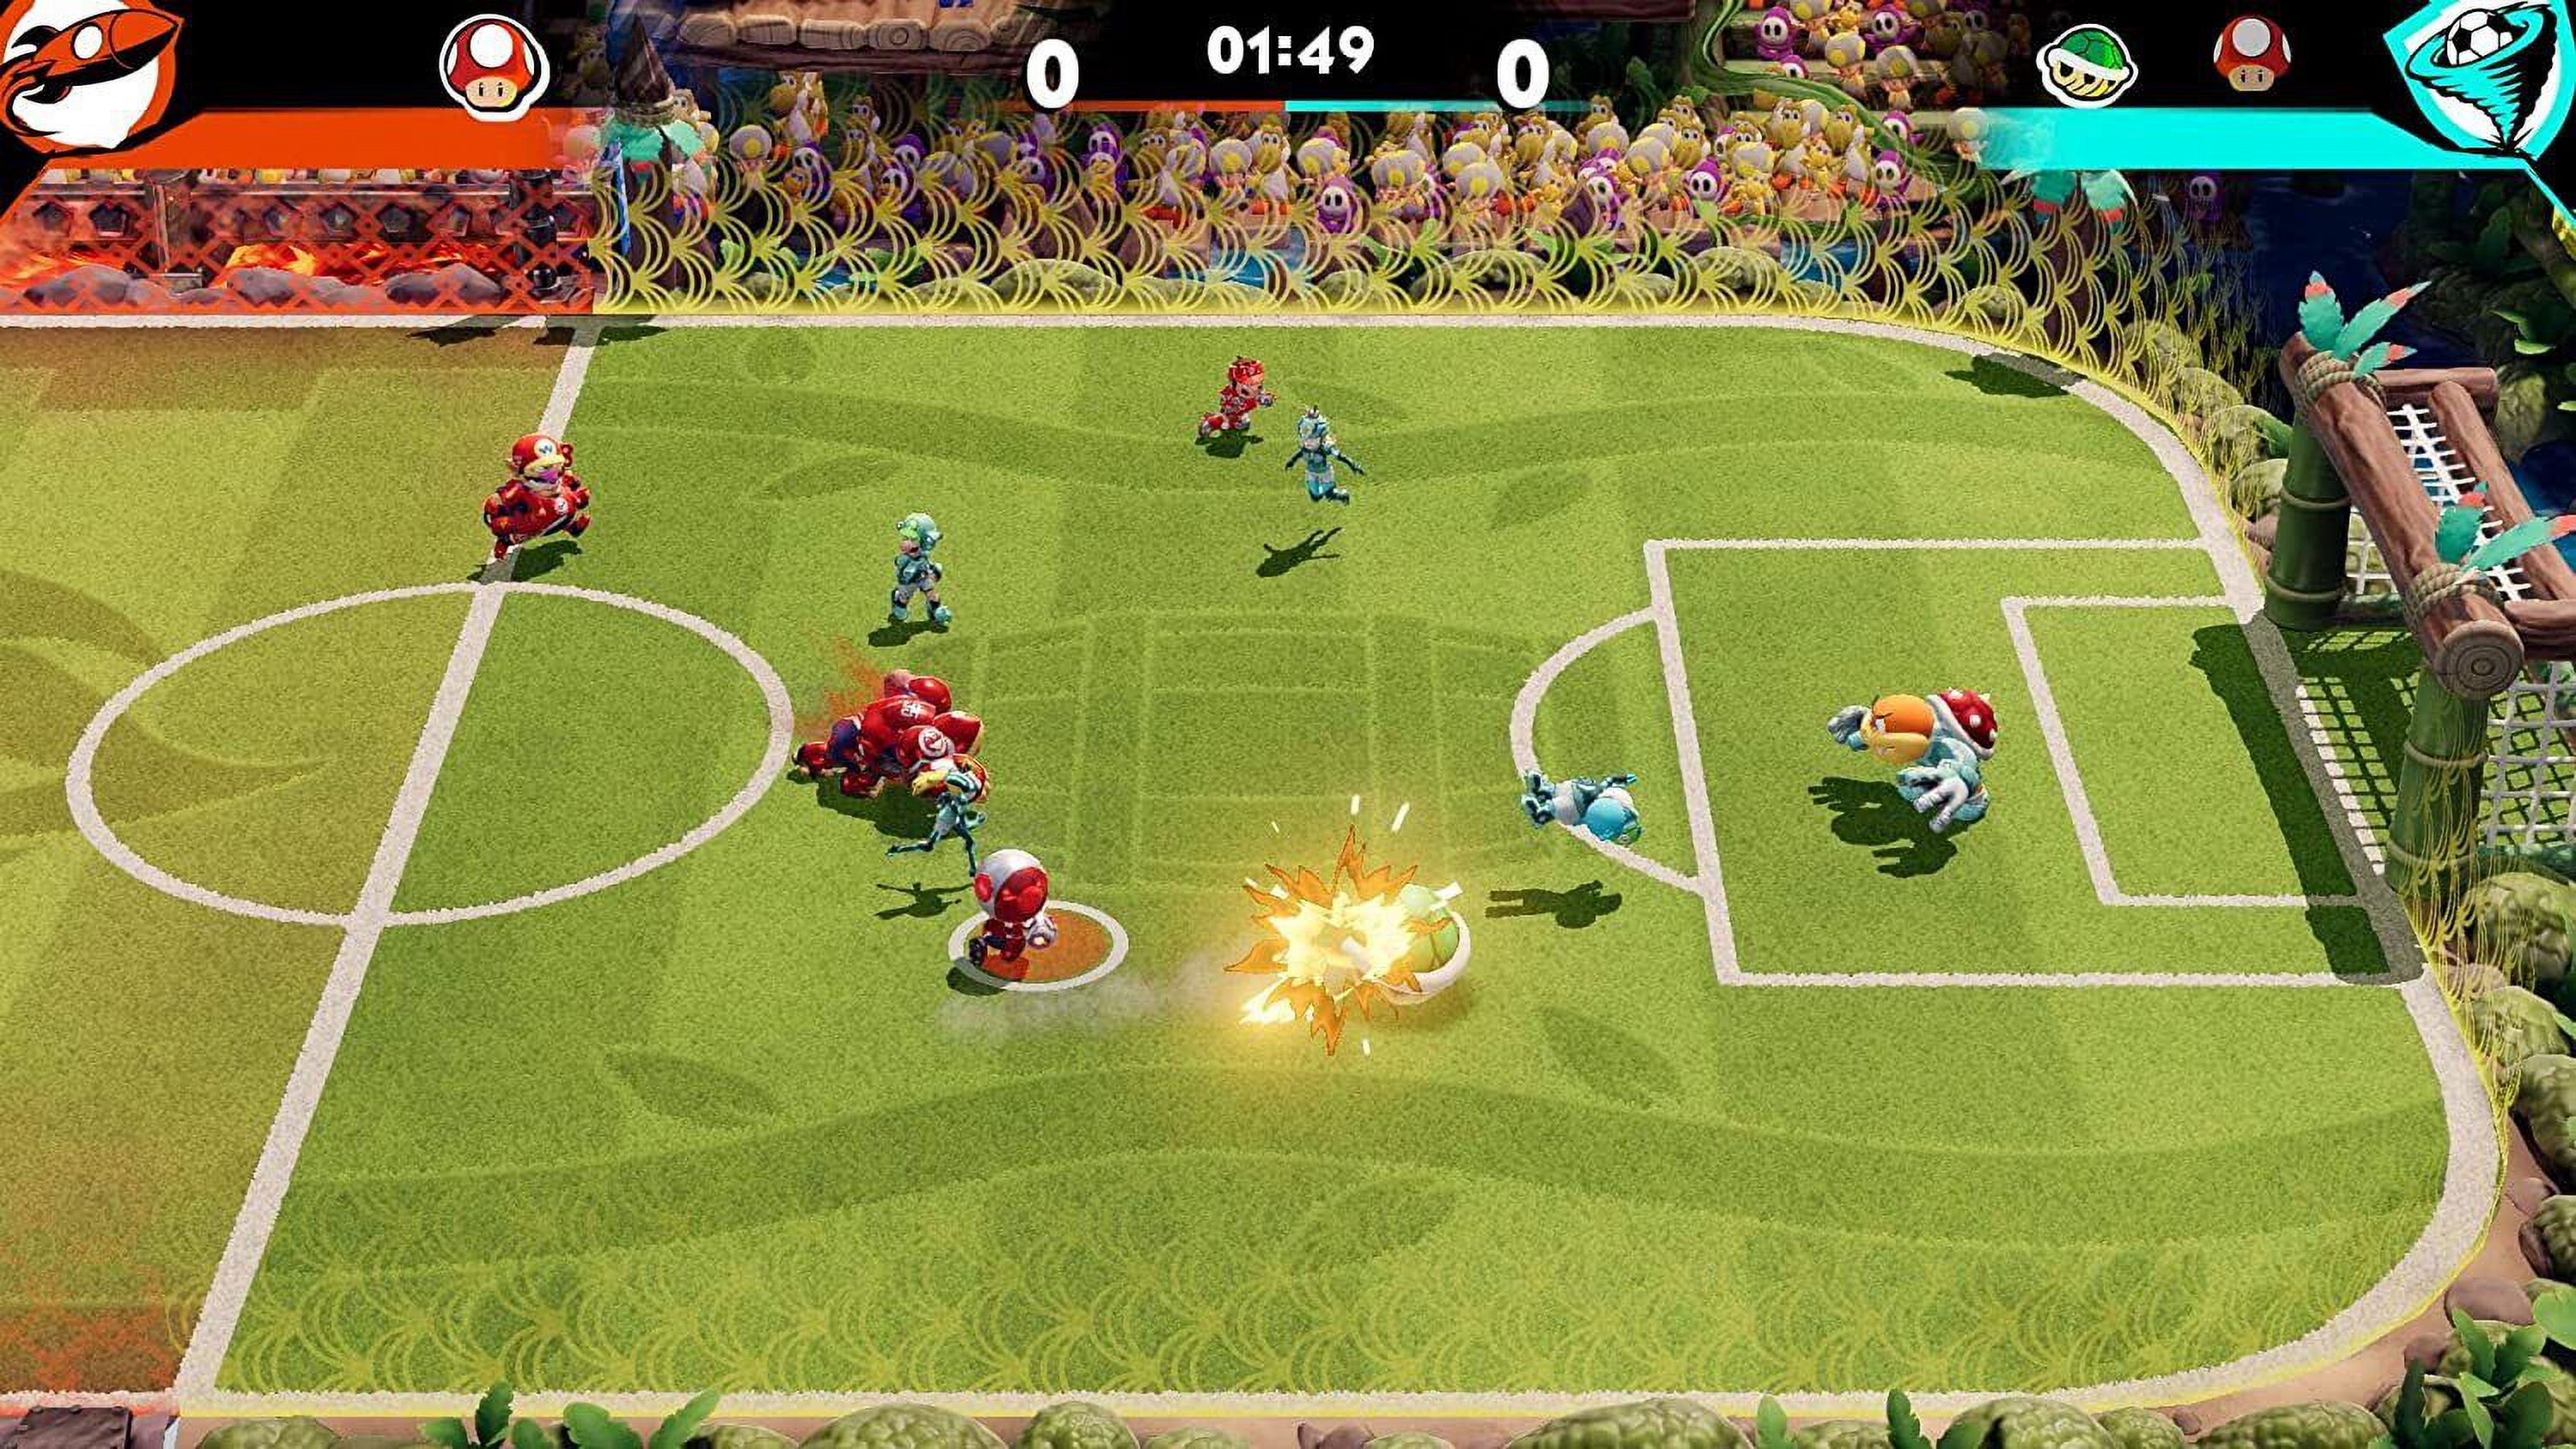 Mario Strikers: Battle League [Nintendo Switch] - image 4 of 5